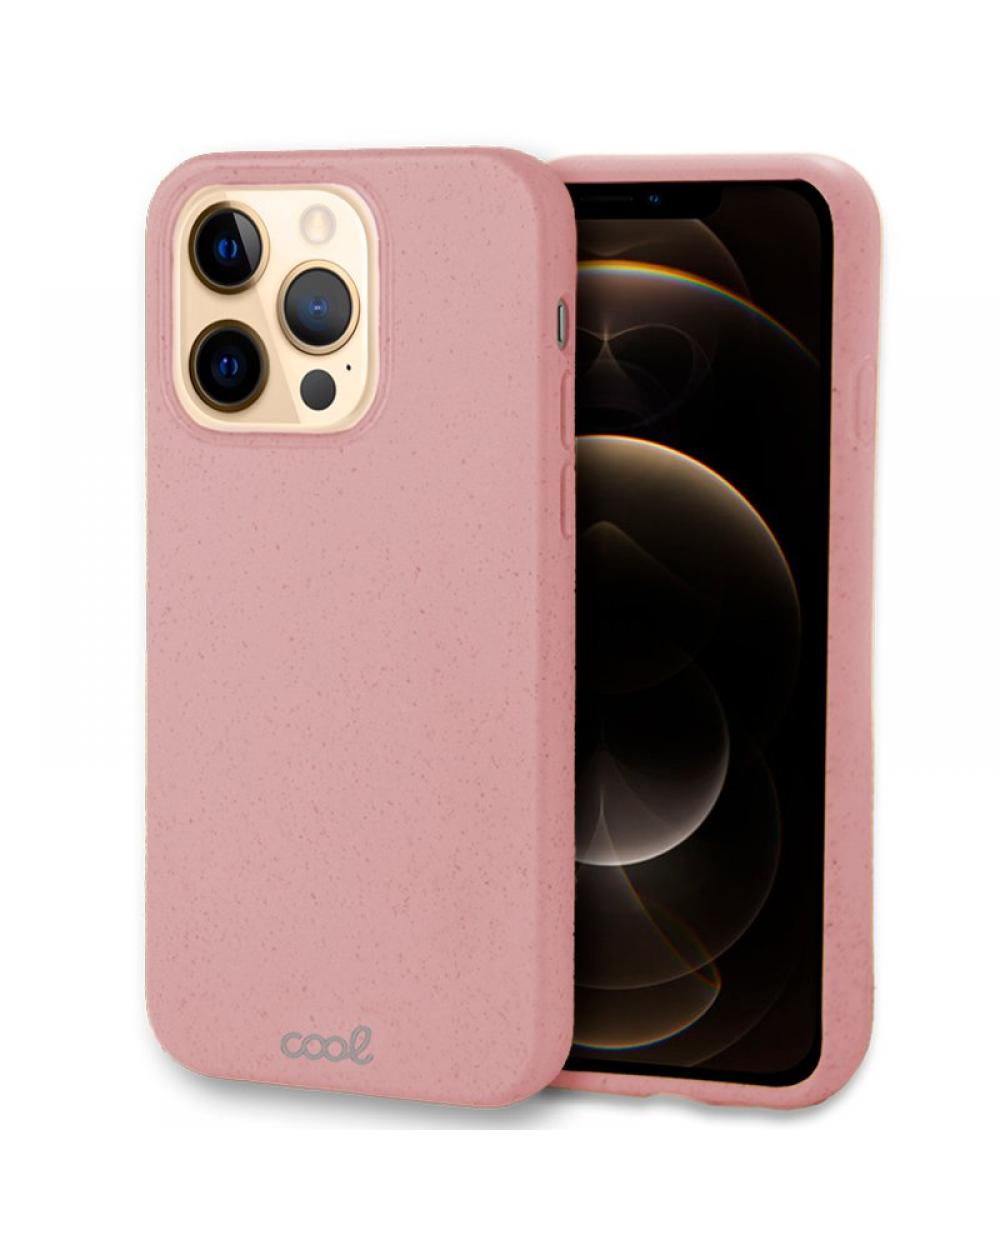 Carcasa COOL para iPhone 12 Pro Max Eco Biodegradable Rosa - Imagen 1